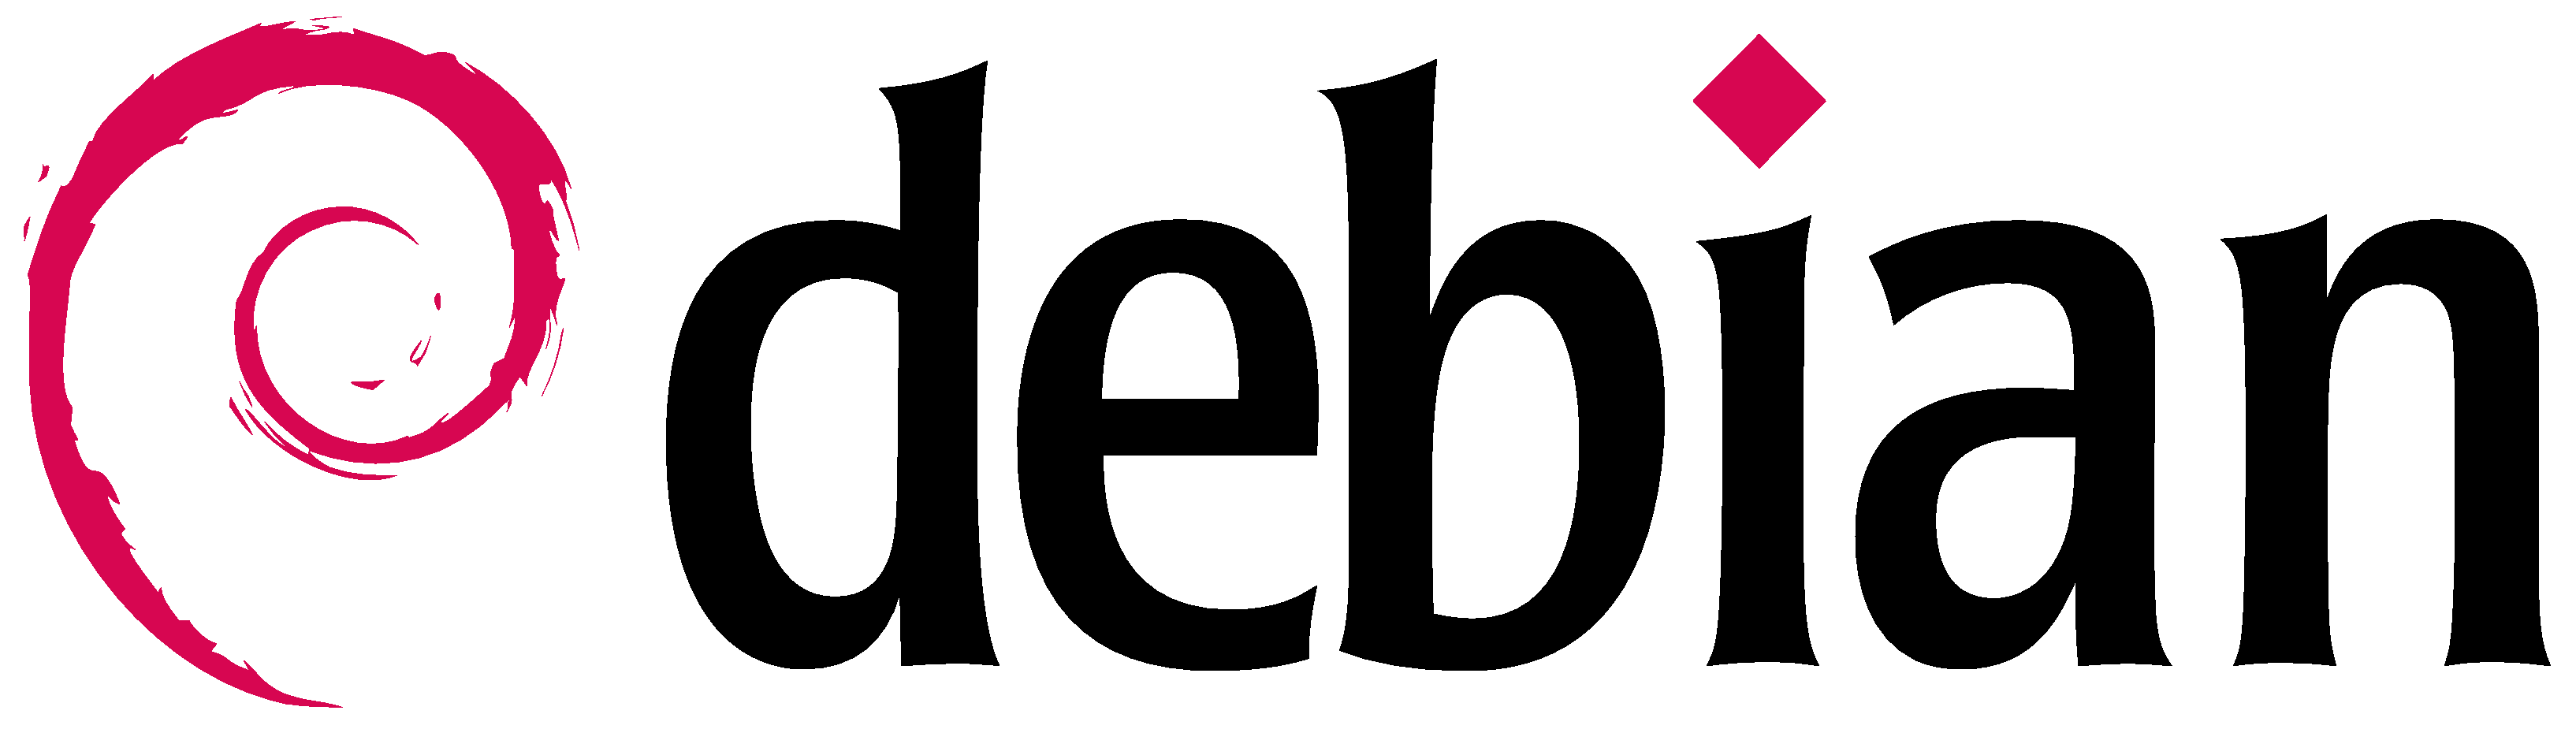 Debain Logo